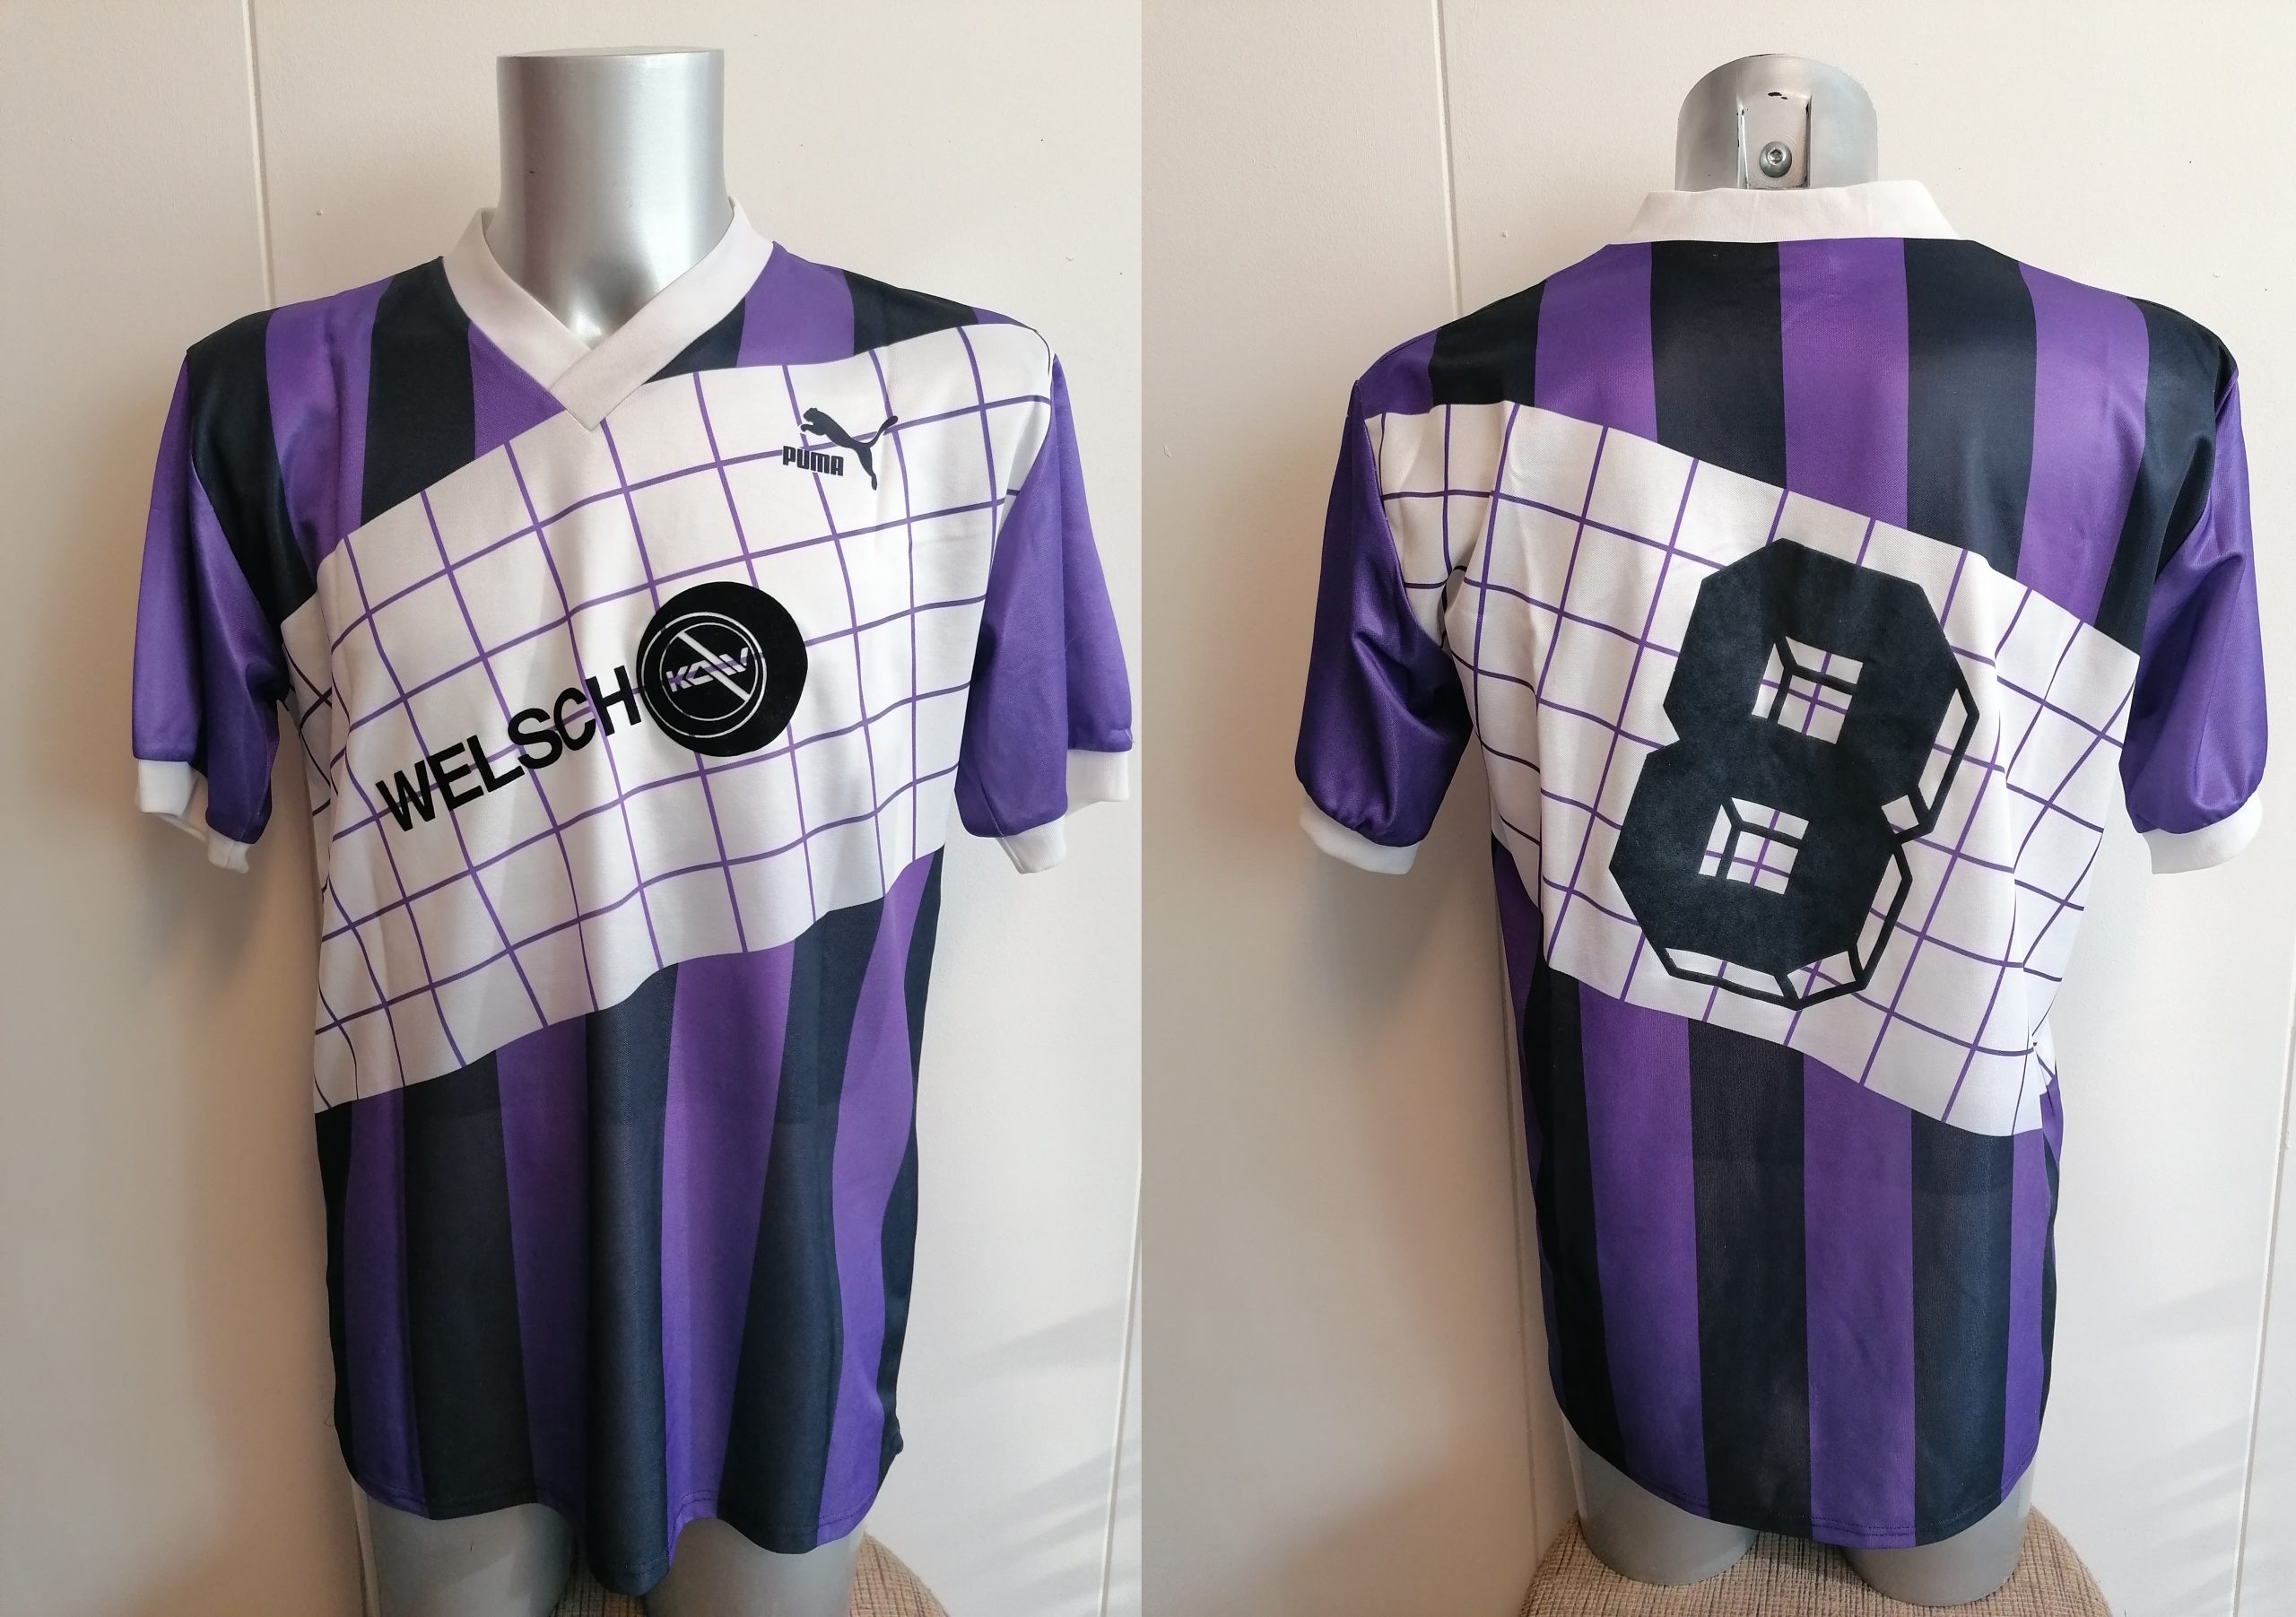 PUMA Retro Soccer Jersey In Purple Exclusive To Asos 57660201 for Men